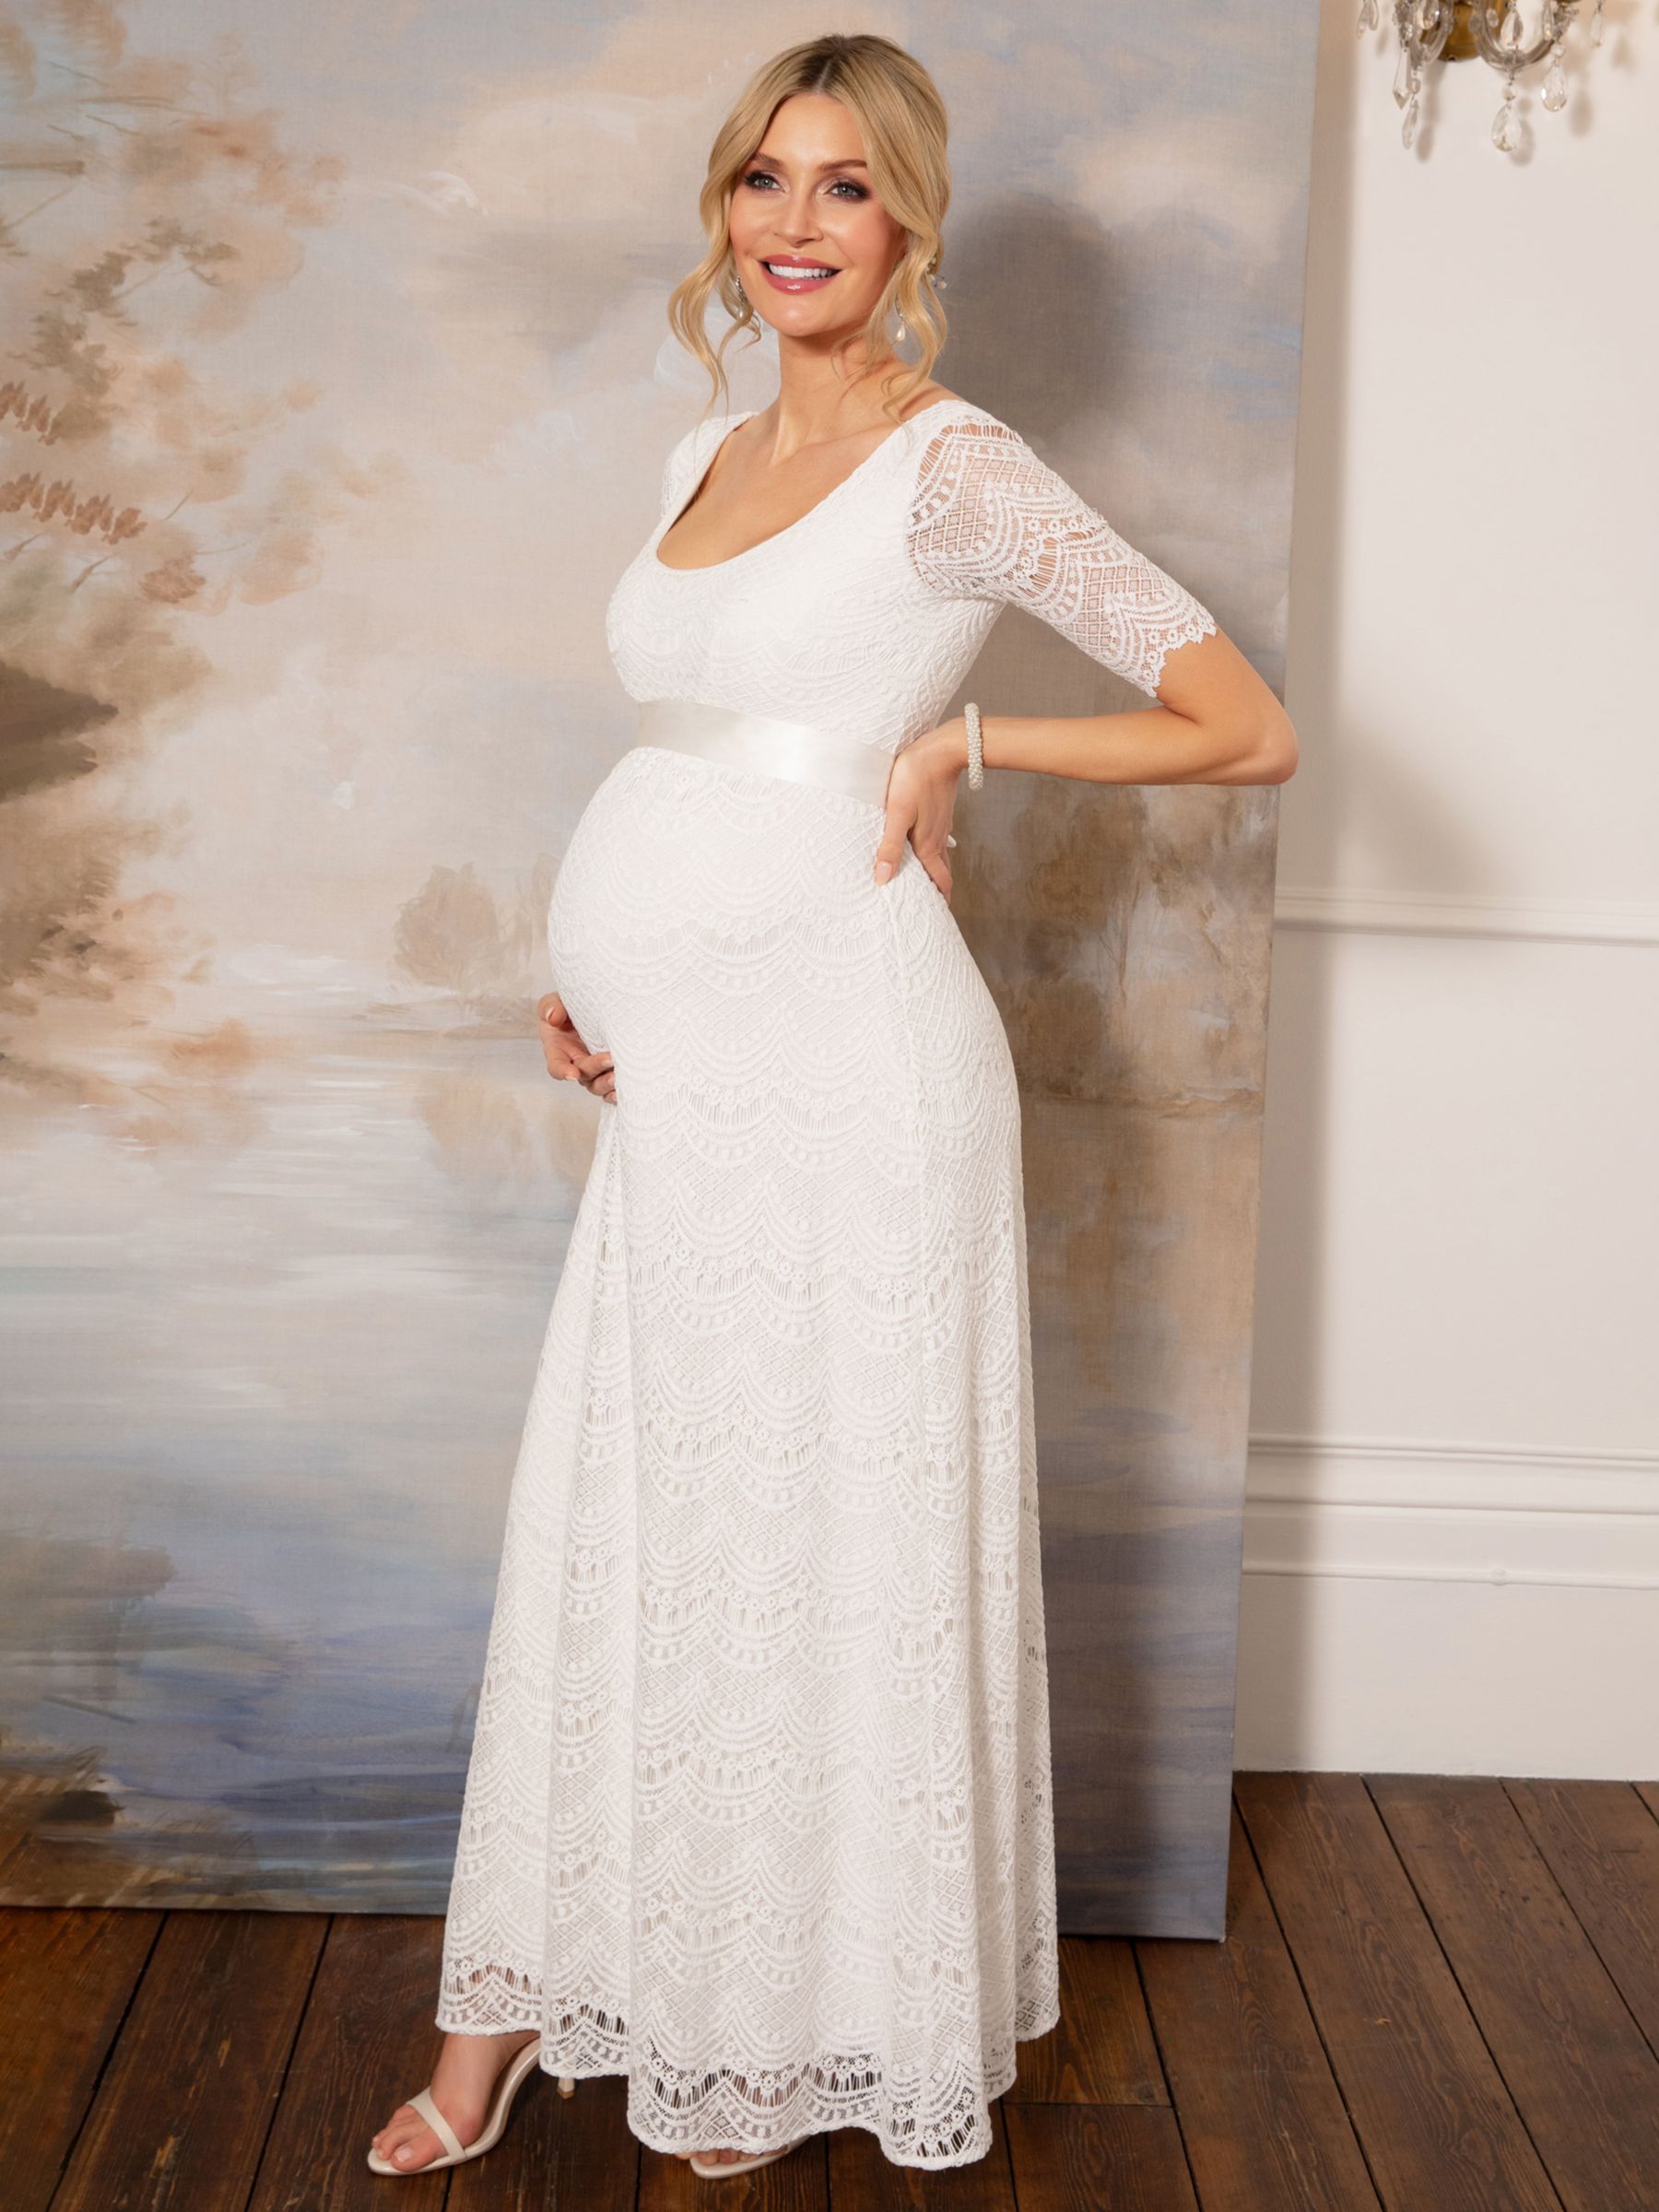 Tiffany Rose Verona Maternity Floral Lace Wedding Dress, Ivory, 6-8